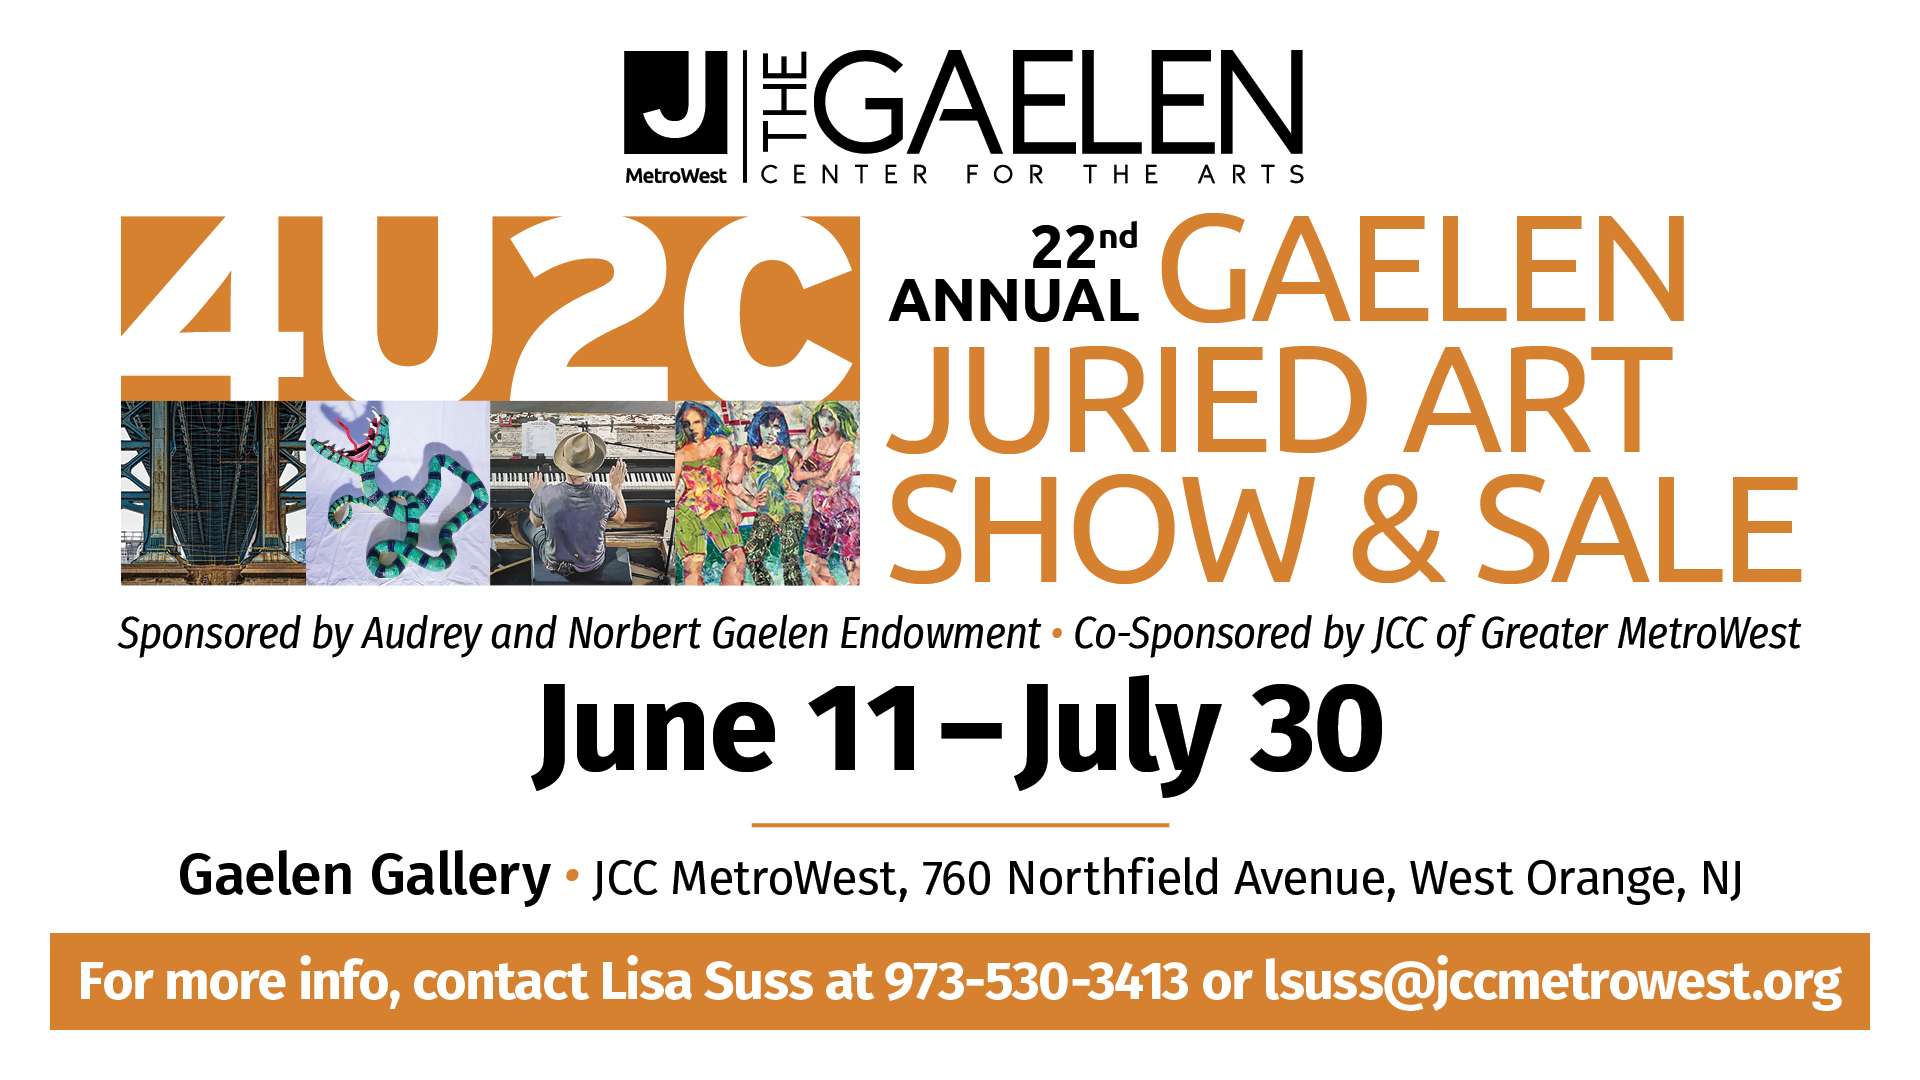 Gaelen Juried Art Show & Sale